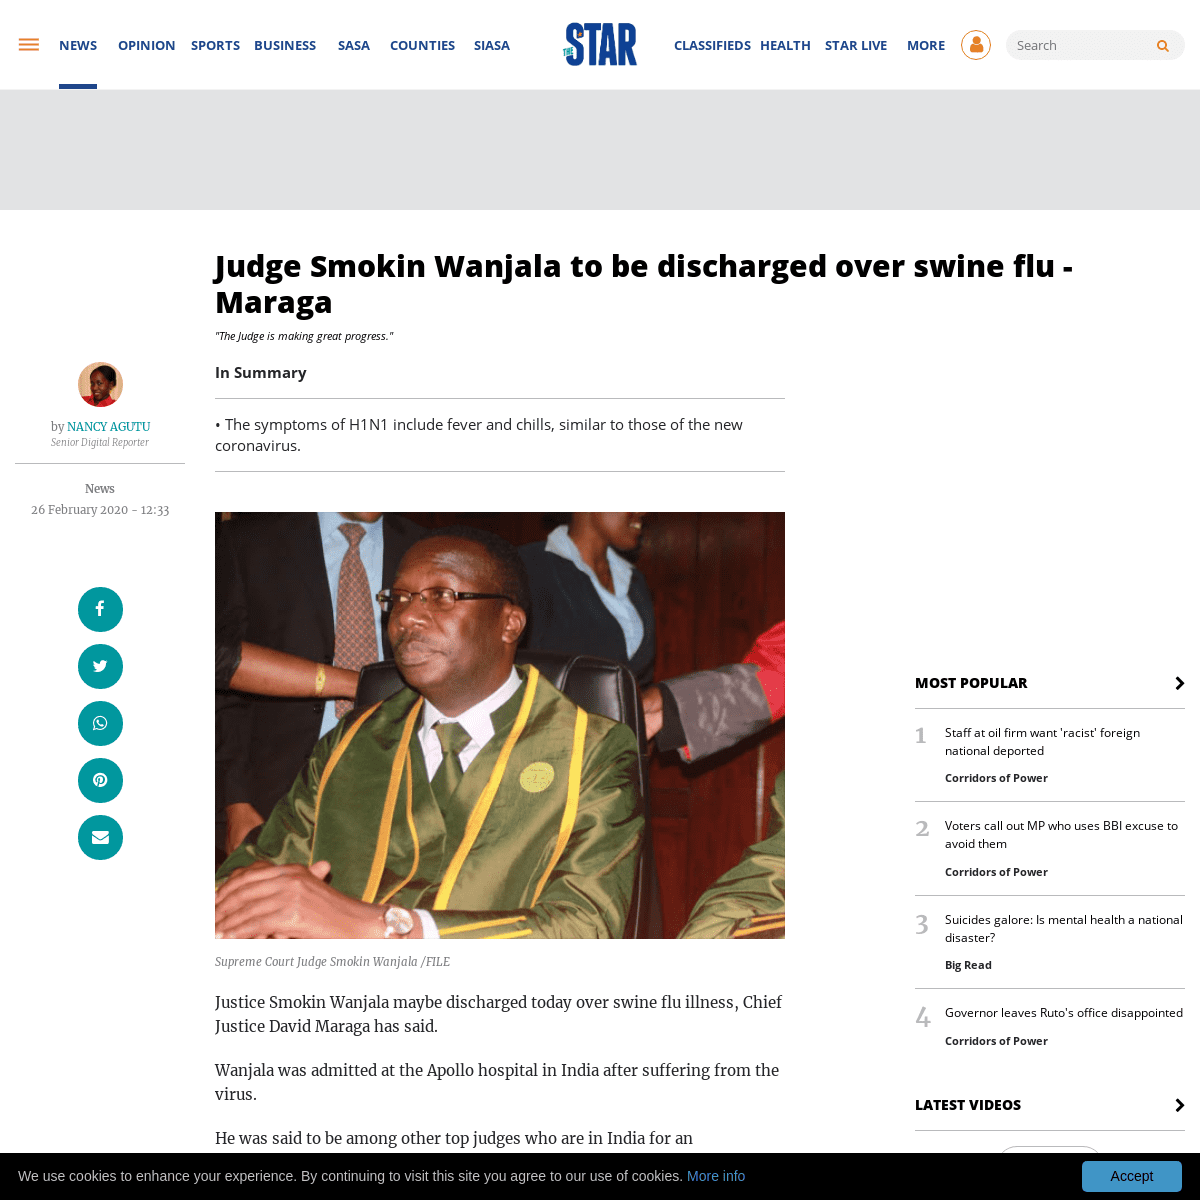 A complete backup of www.the-star.co.ke/news/2020-02-26-judge-smokin-wanjala-to-be-discharged-over-swine-flu-maraga/